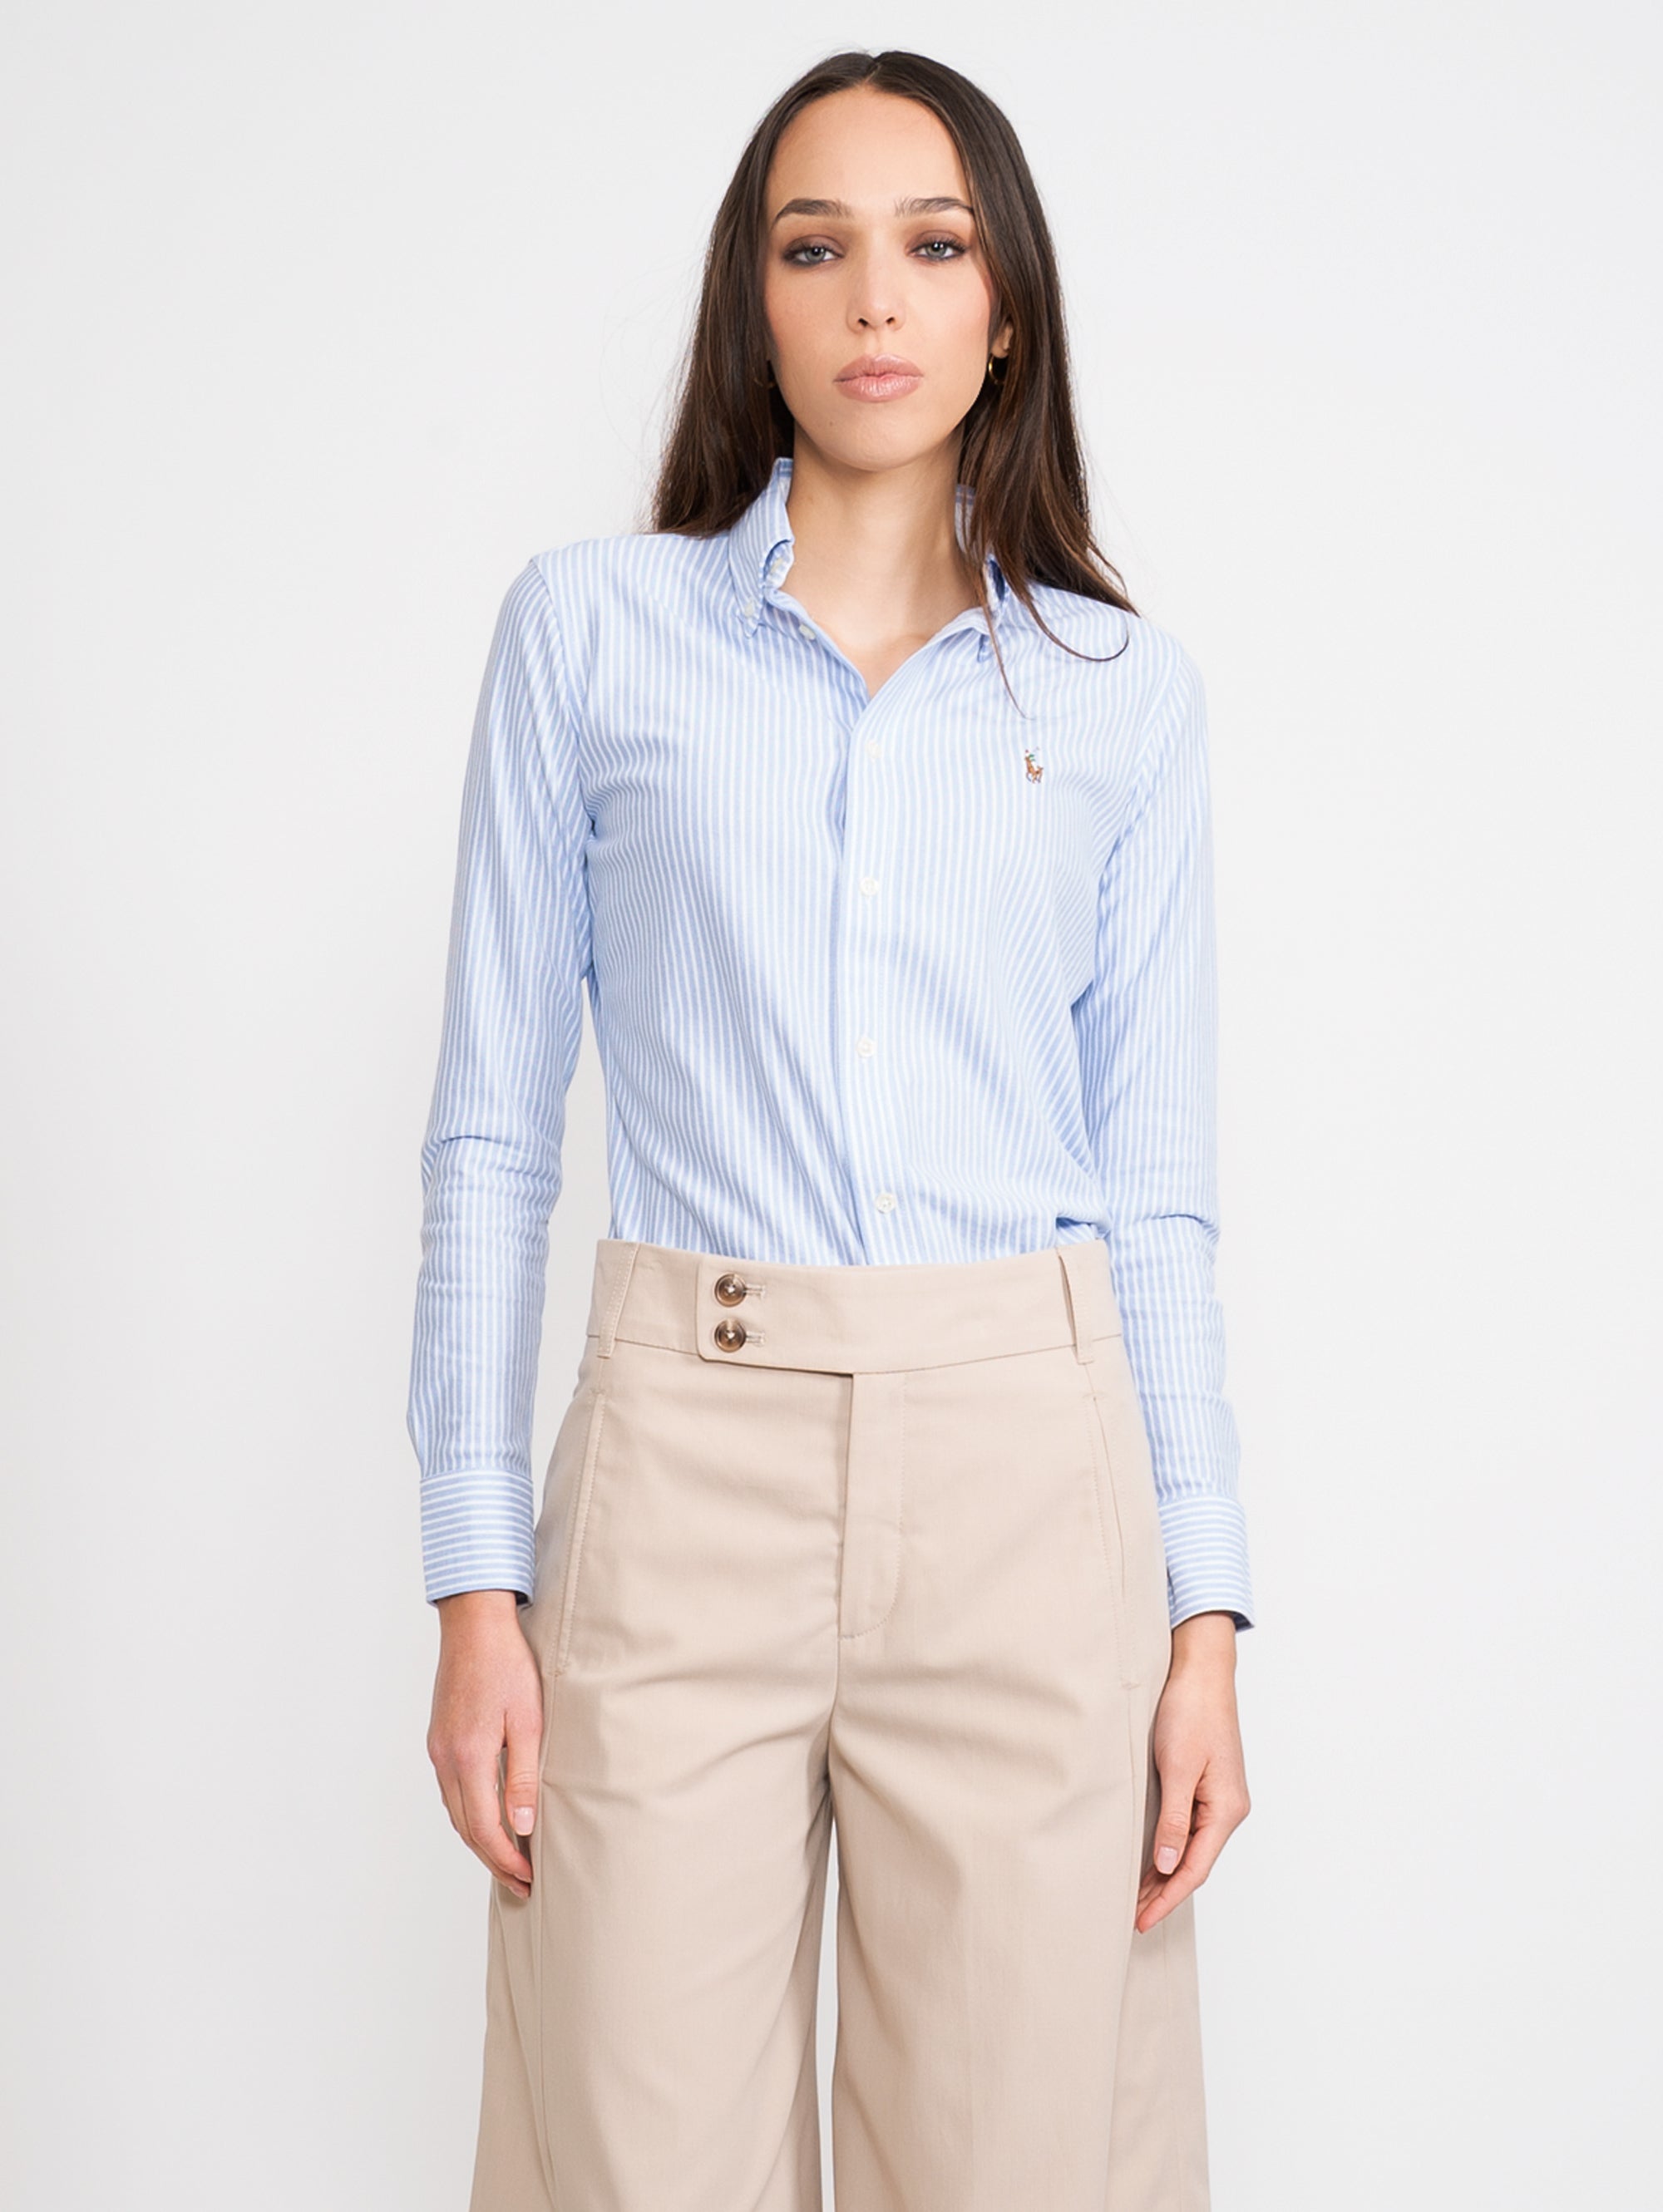 RALPH LAUREN-Camicia Knit Oxford Bianco/Blu-TRYME Shop